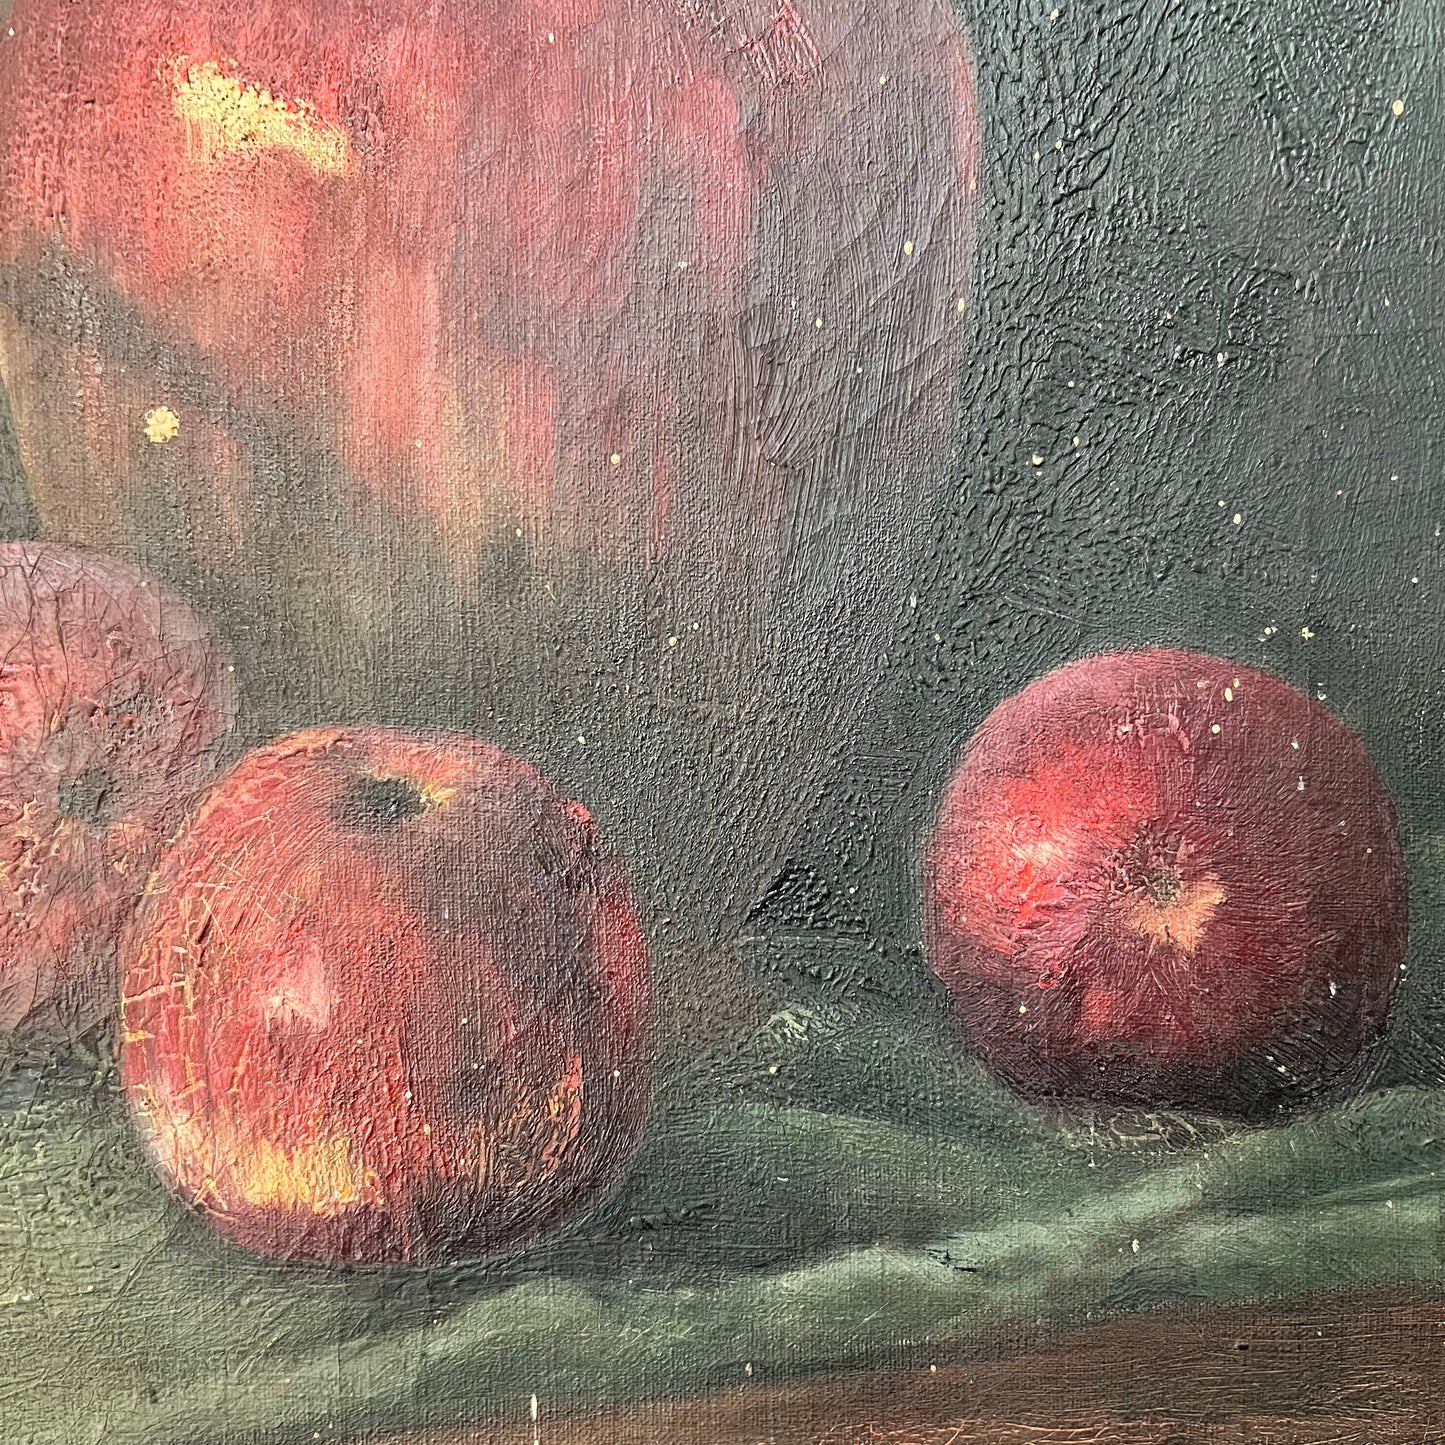 Rustic Antique Oil Painting Still Life of Vase, Apples & Basket